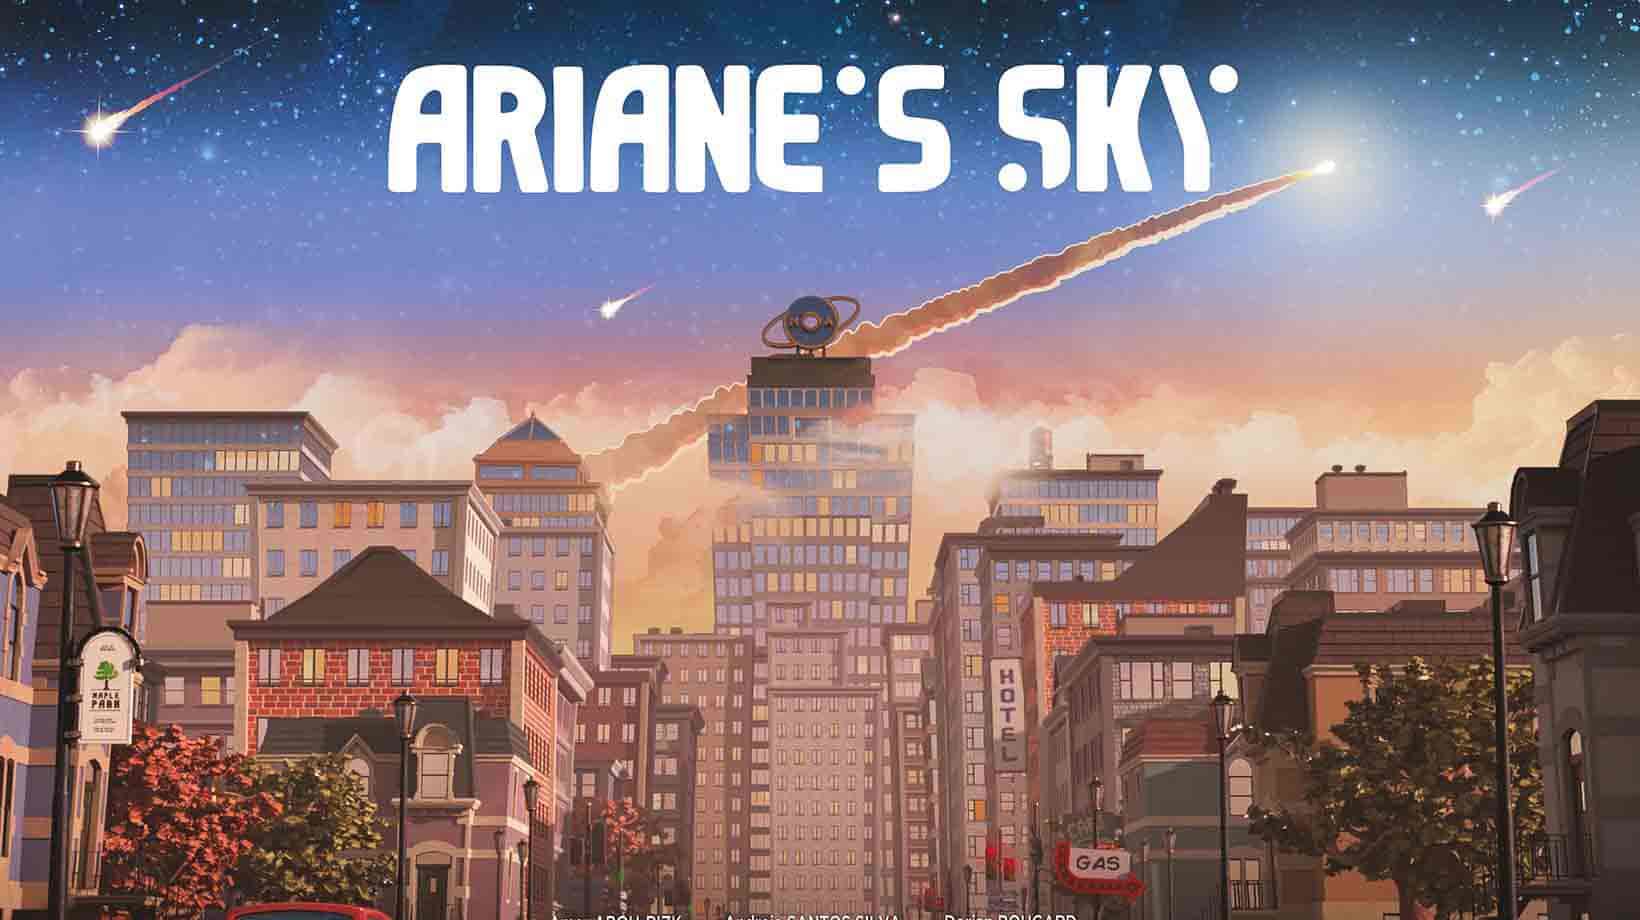 Ariane's sky